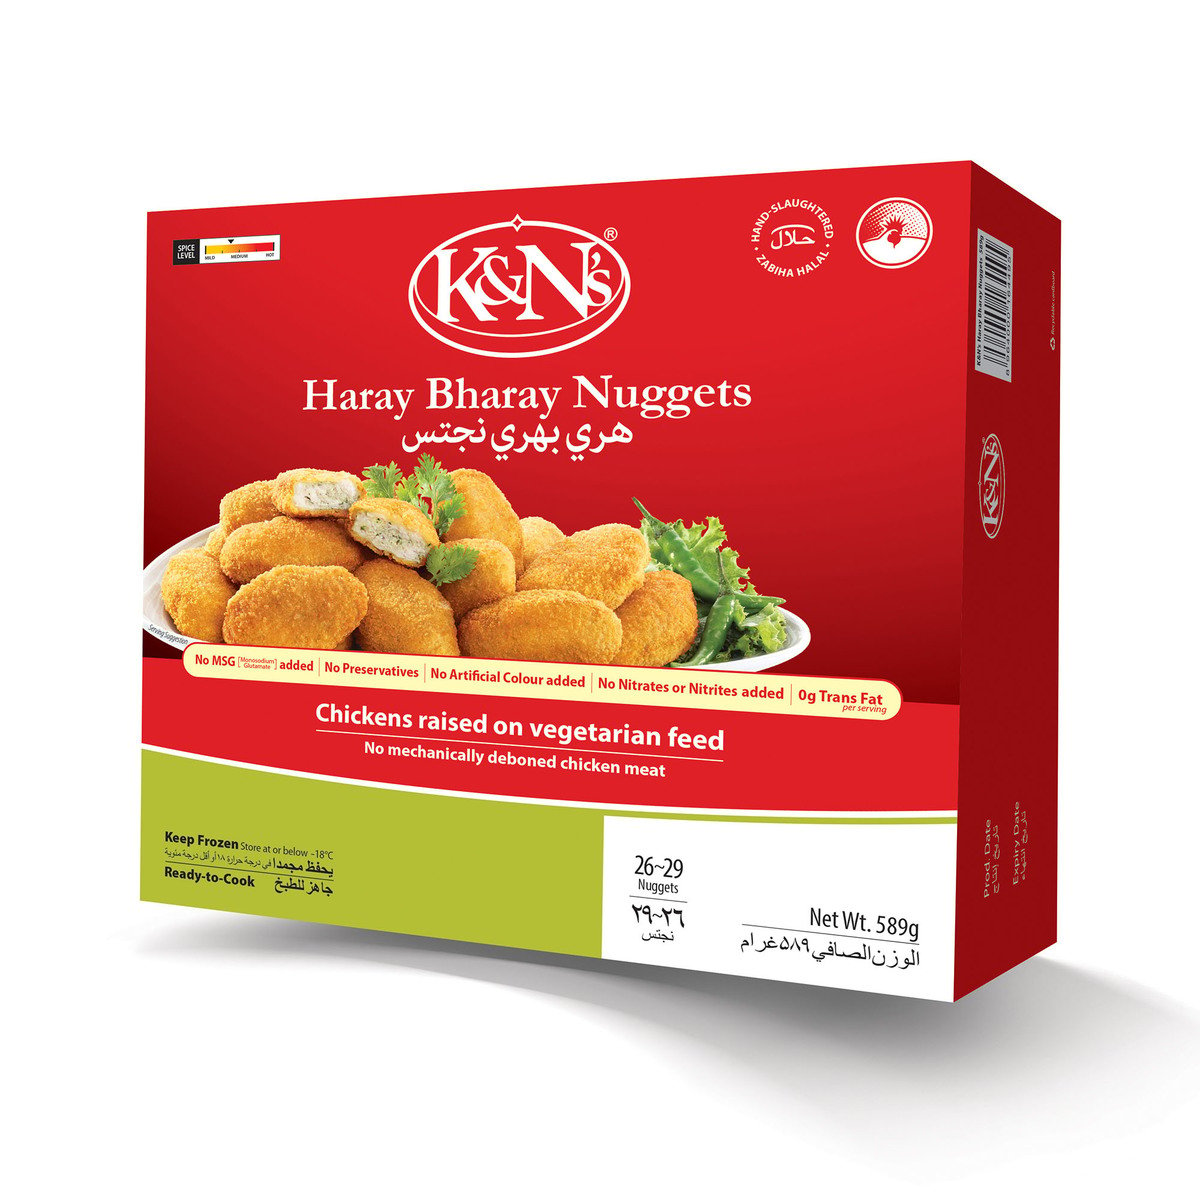 K&N's Haray Bharay Nuggets 589 g